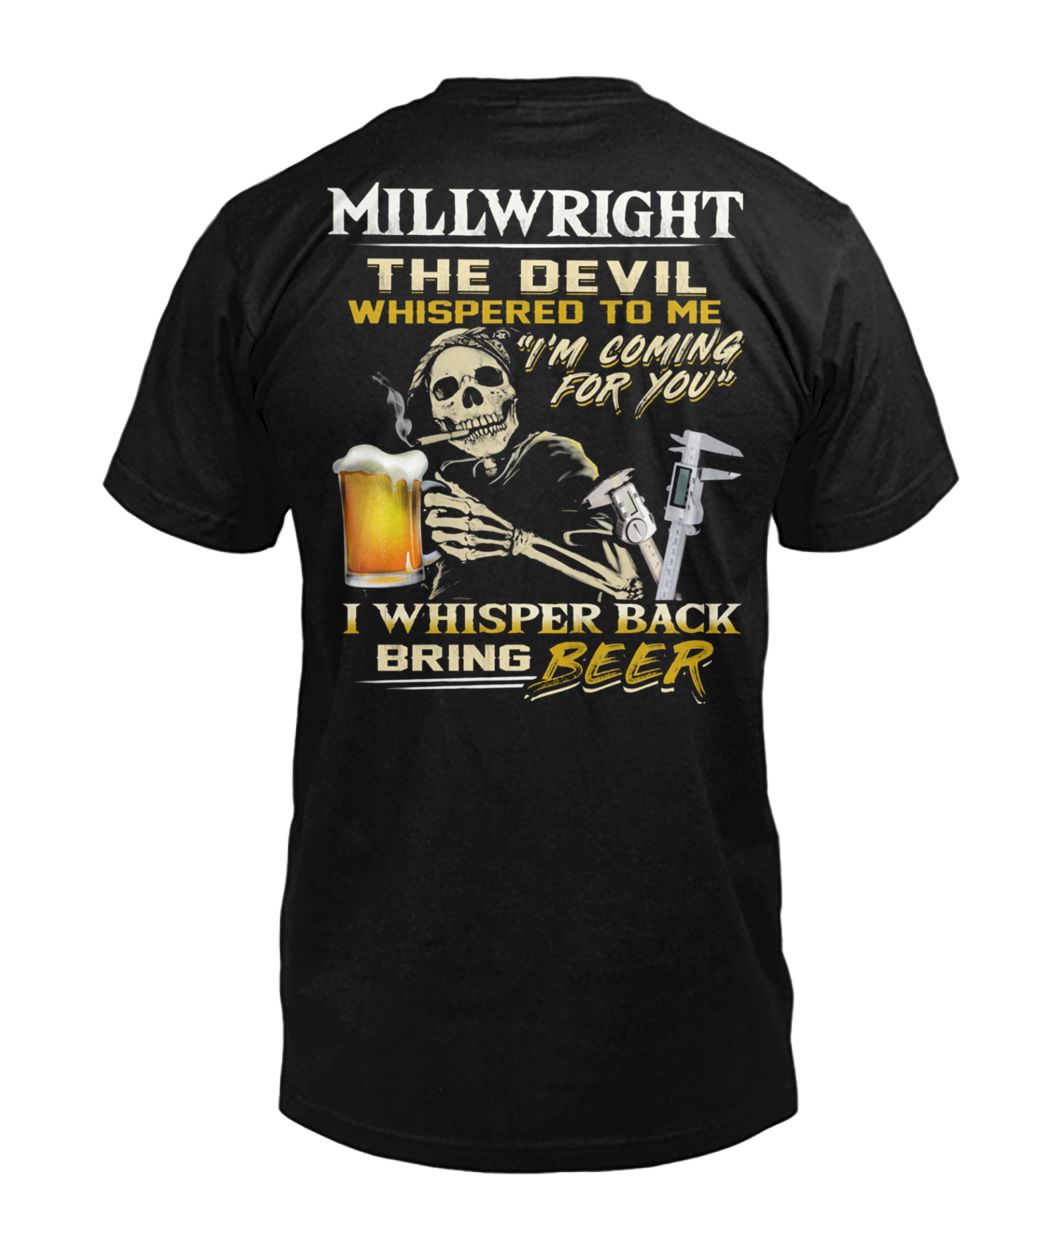 Millwright the devil whispered to me I'm coming for you mens v-neck